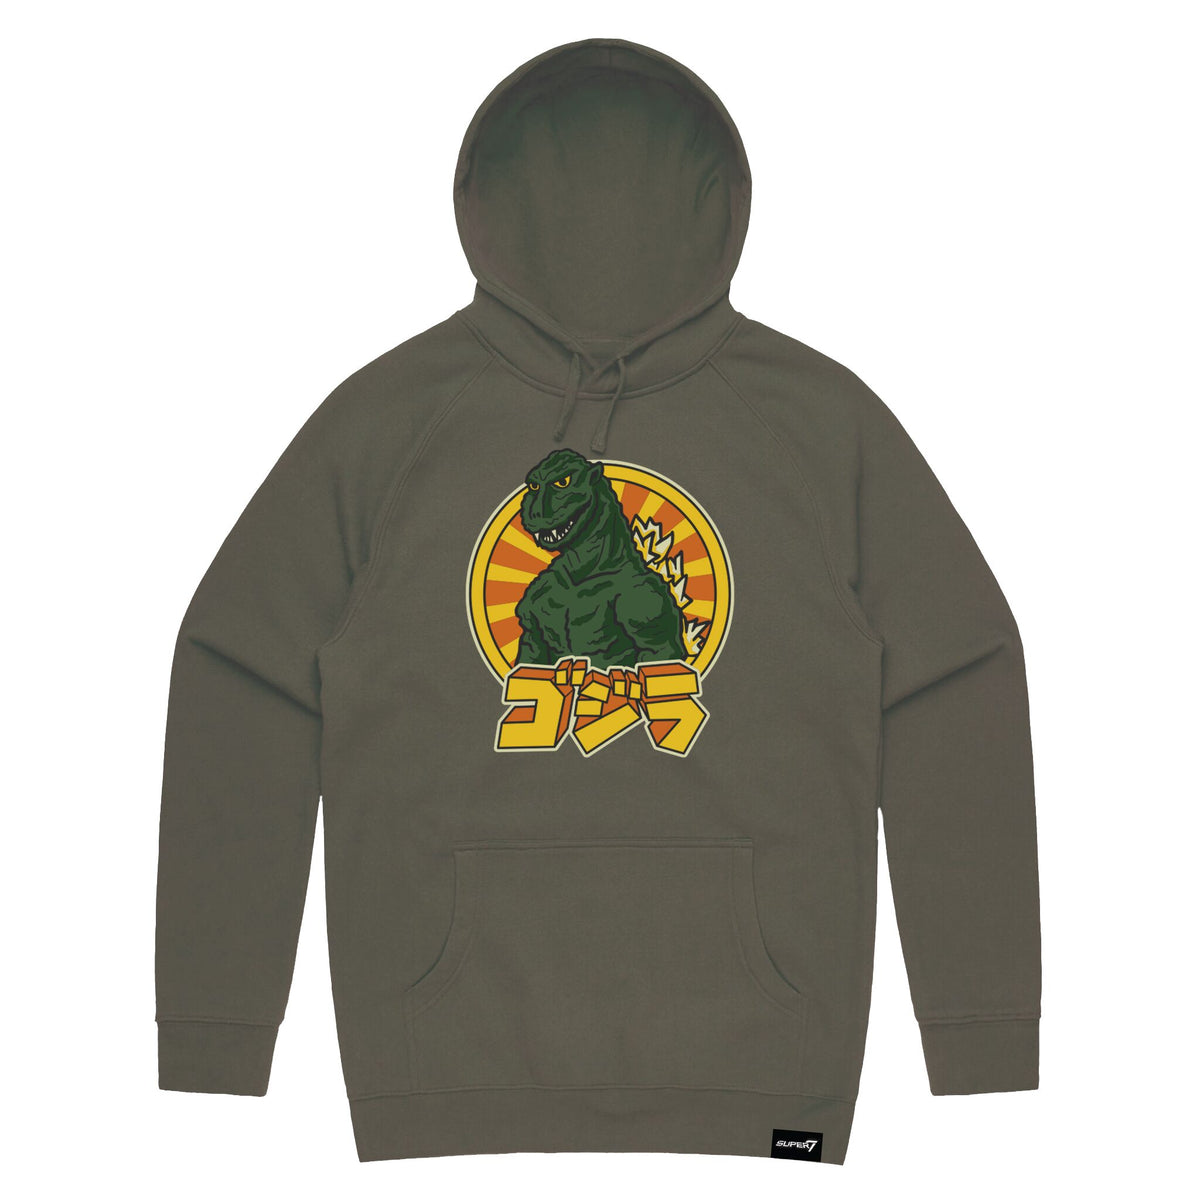 Toho Godzilla Retro Army Green pullover Hoodie – Super7